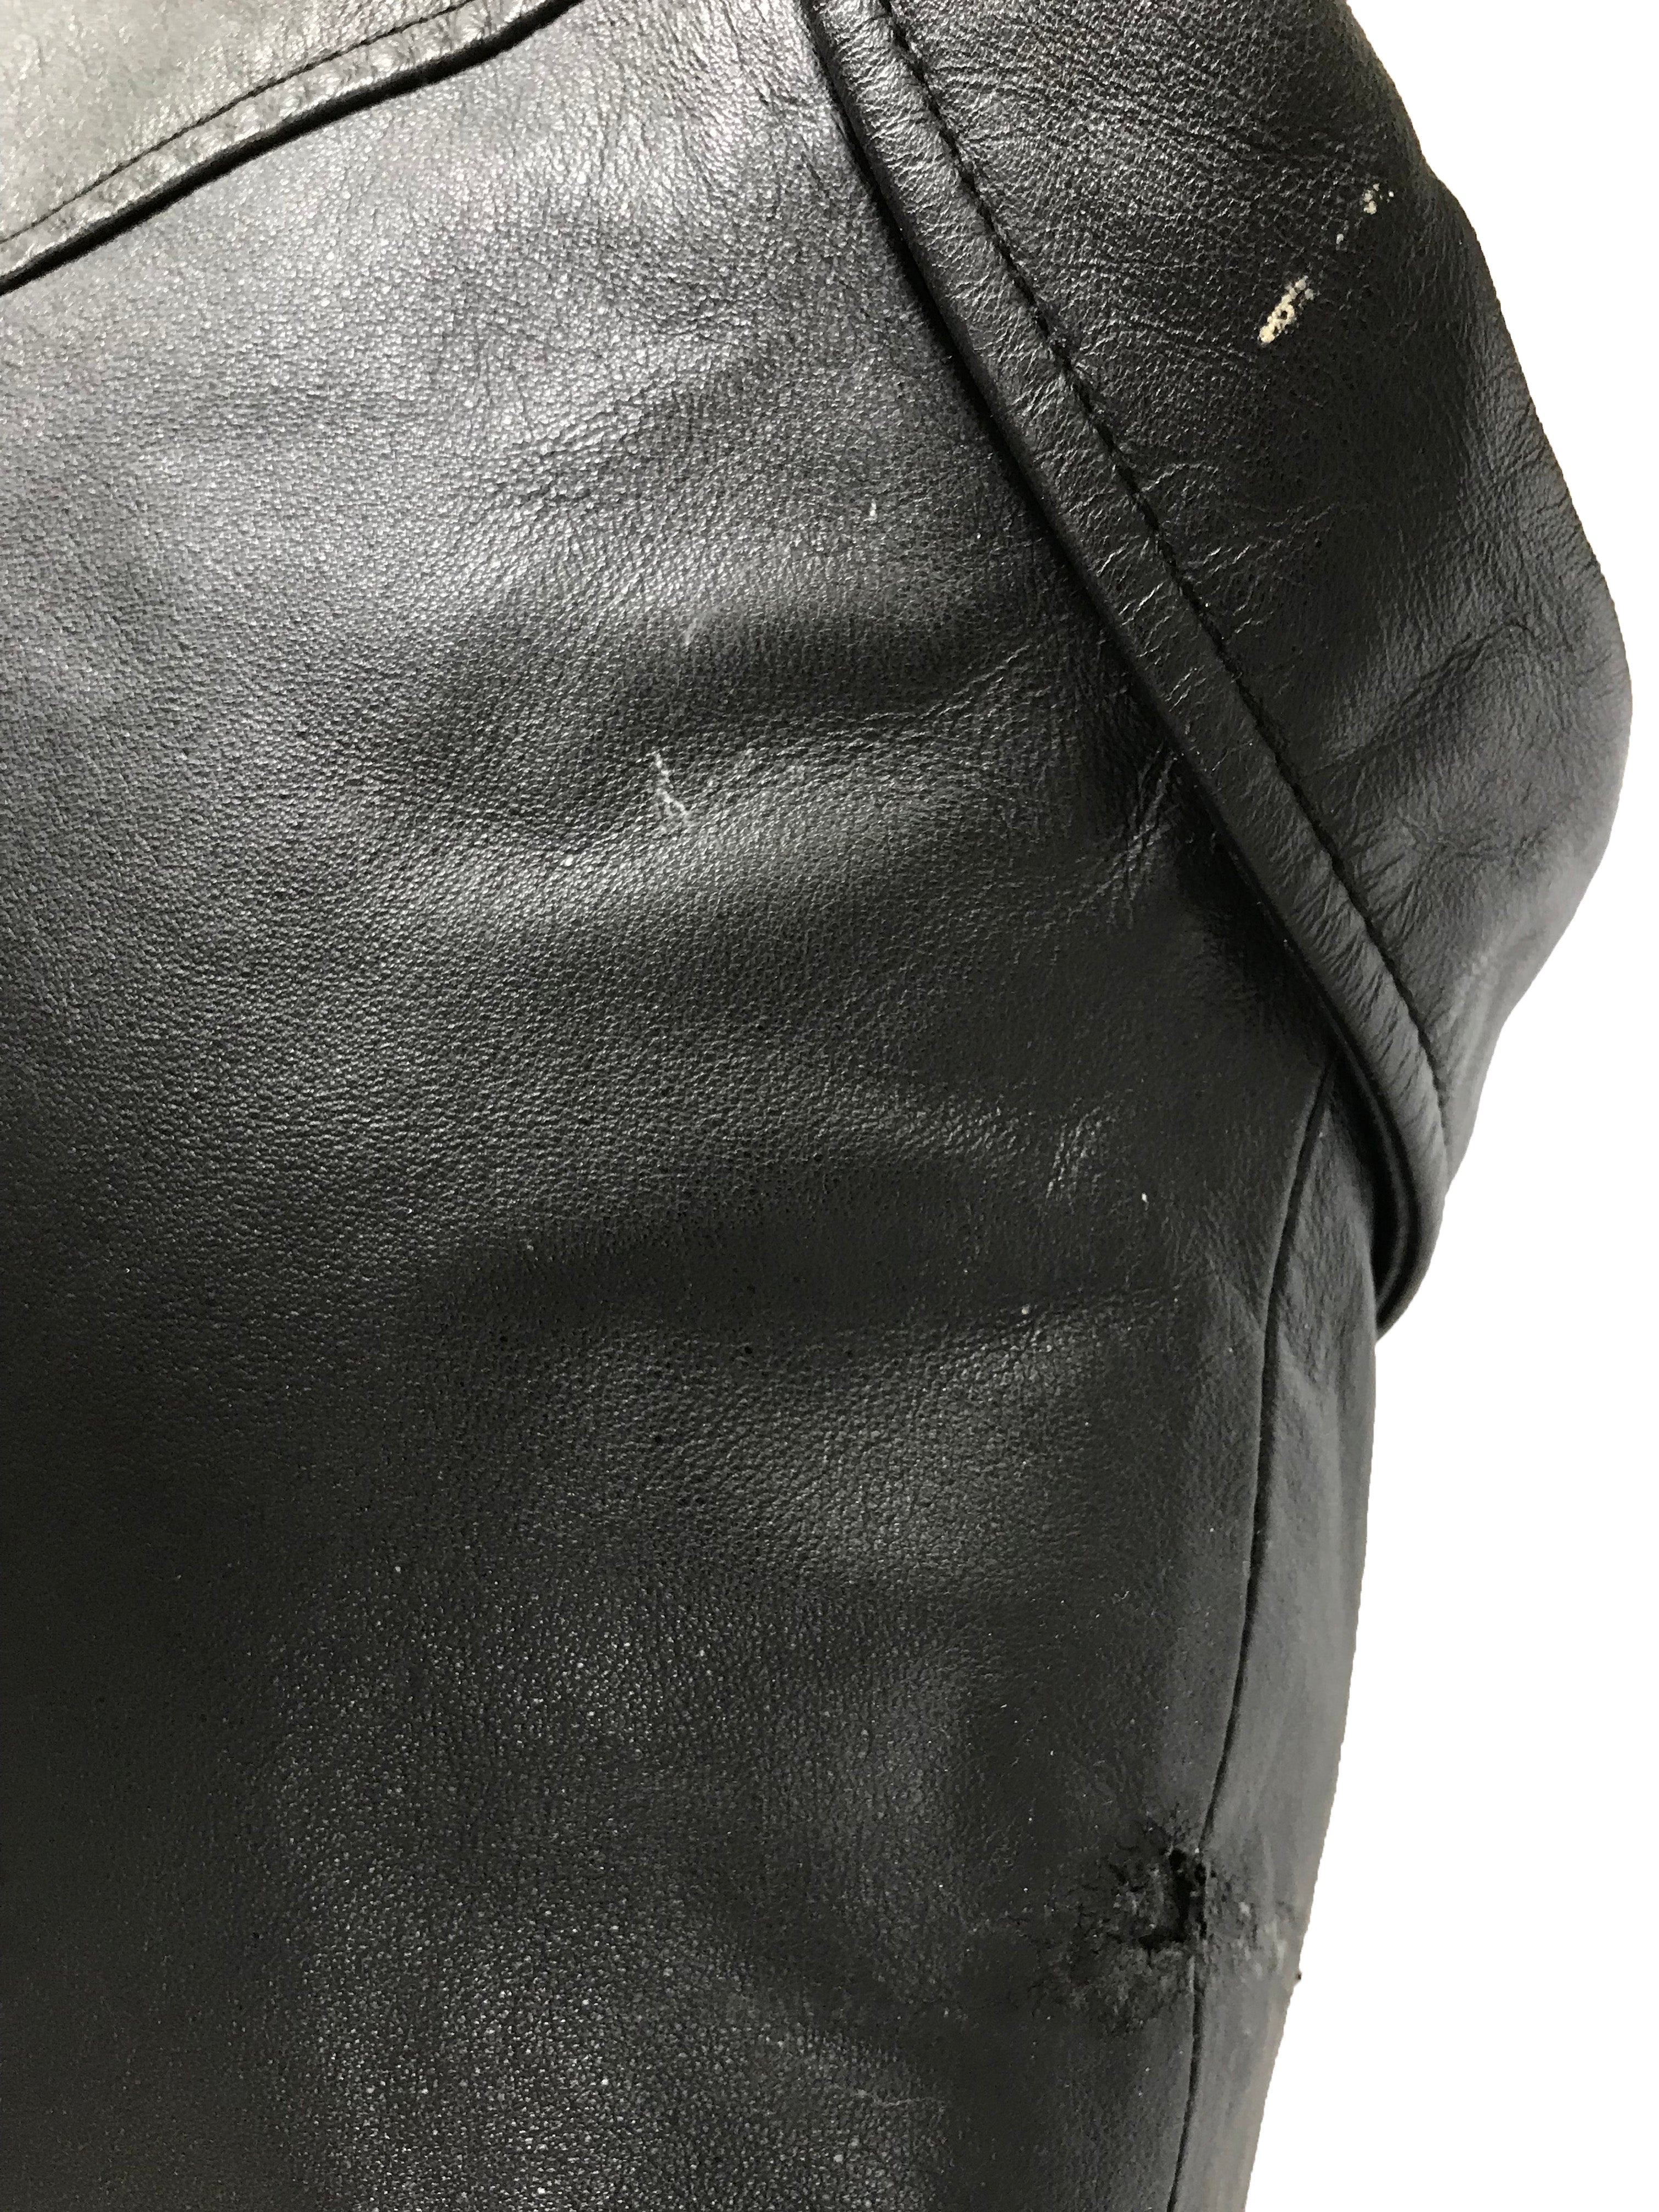 Wilson's Black Leather Jacket Women's Size M